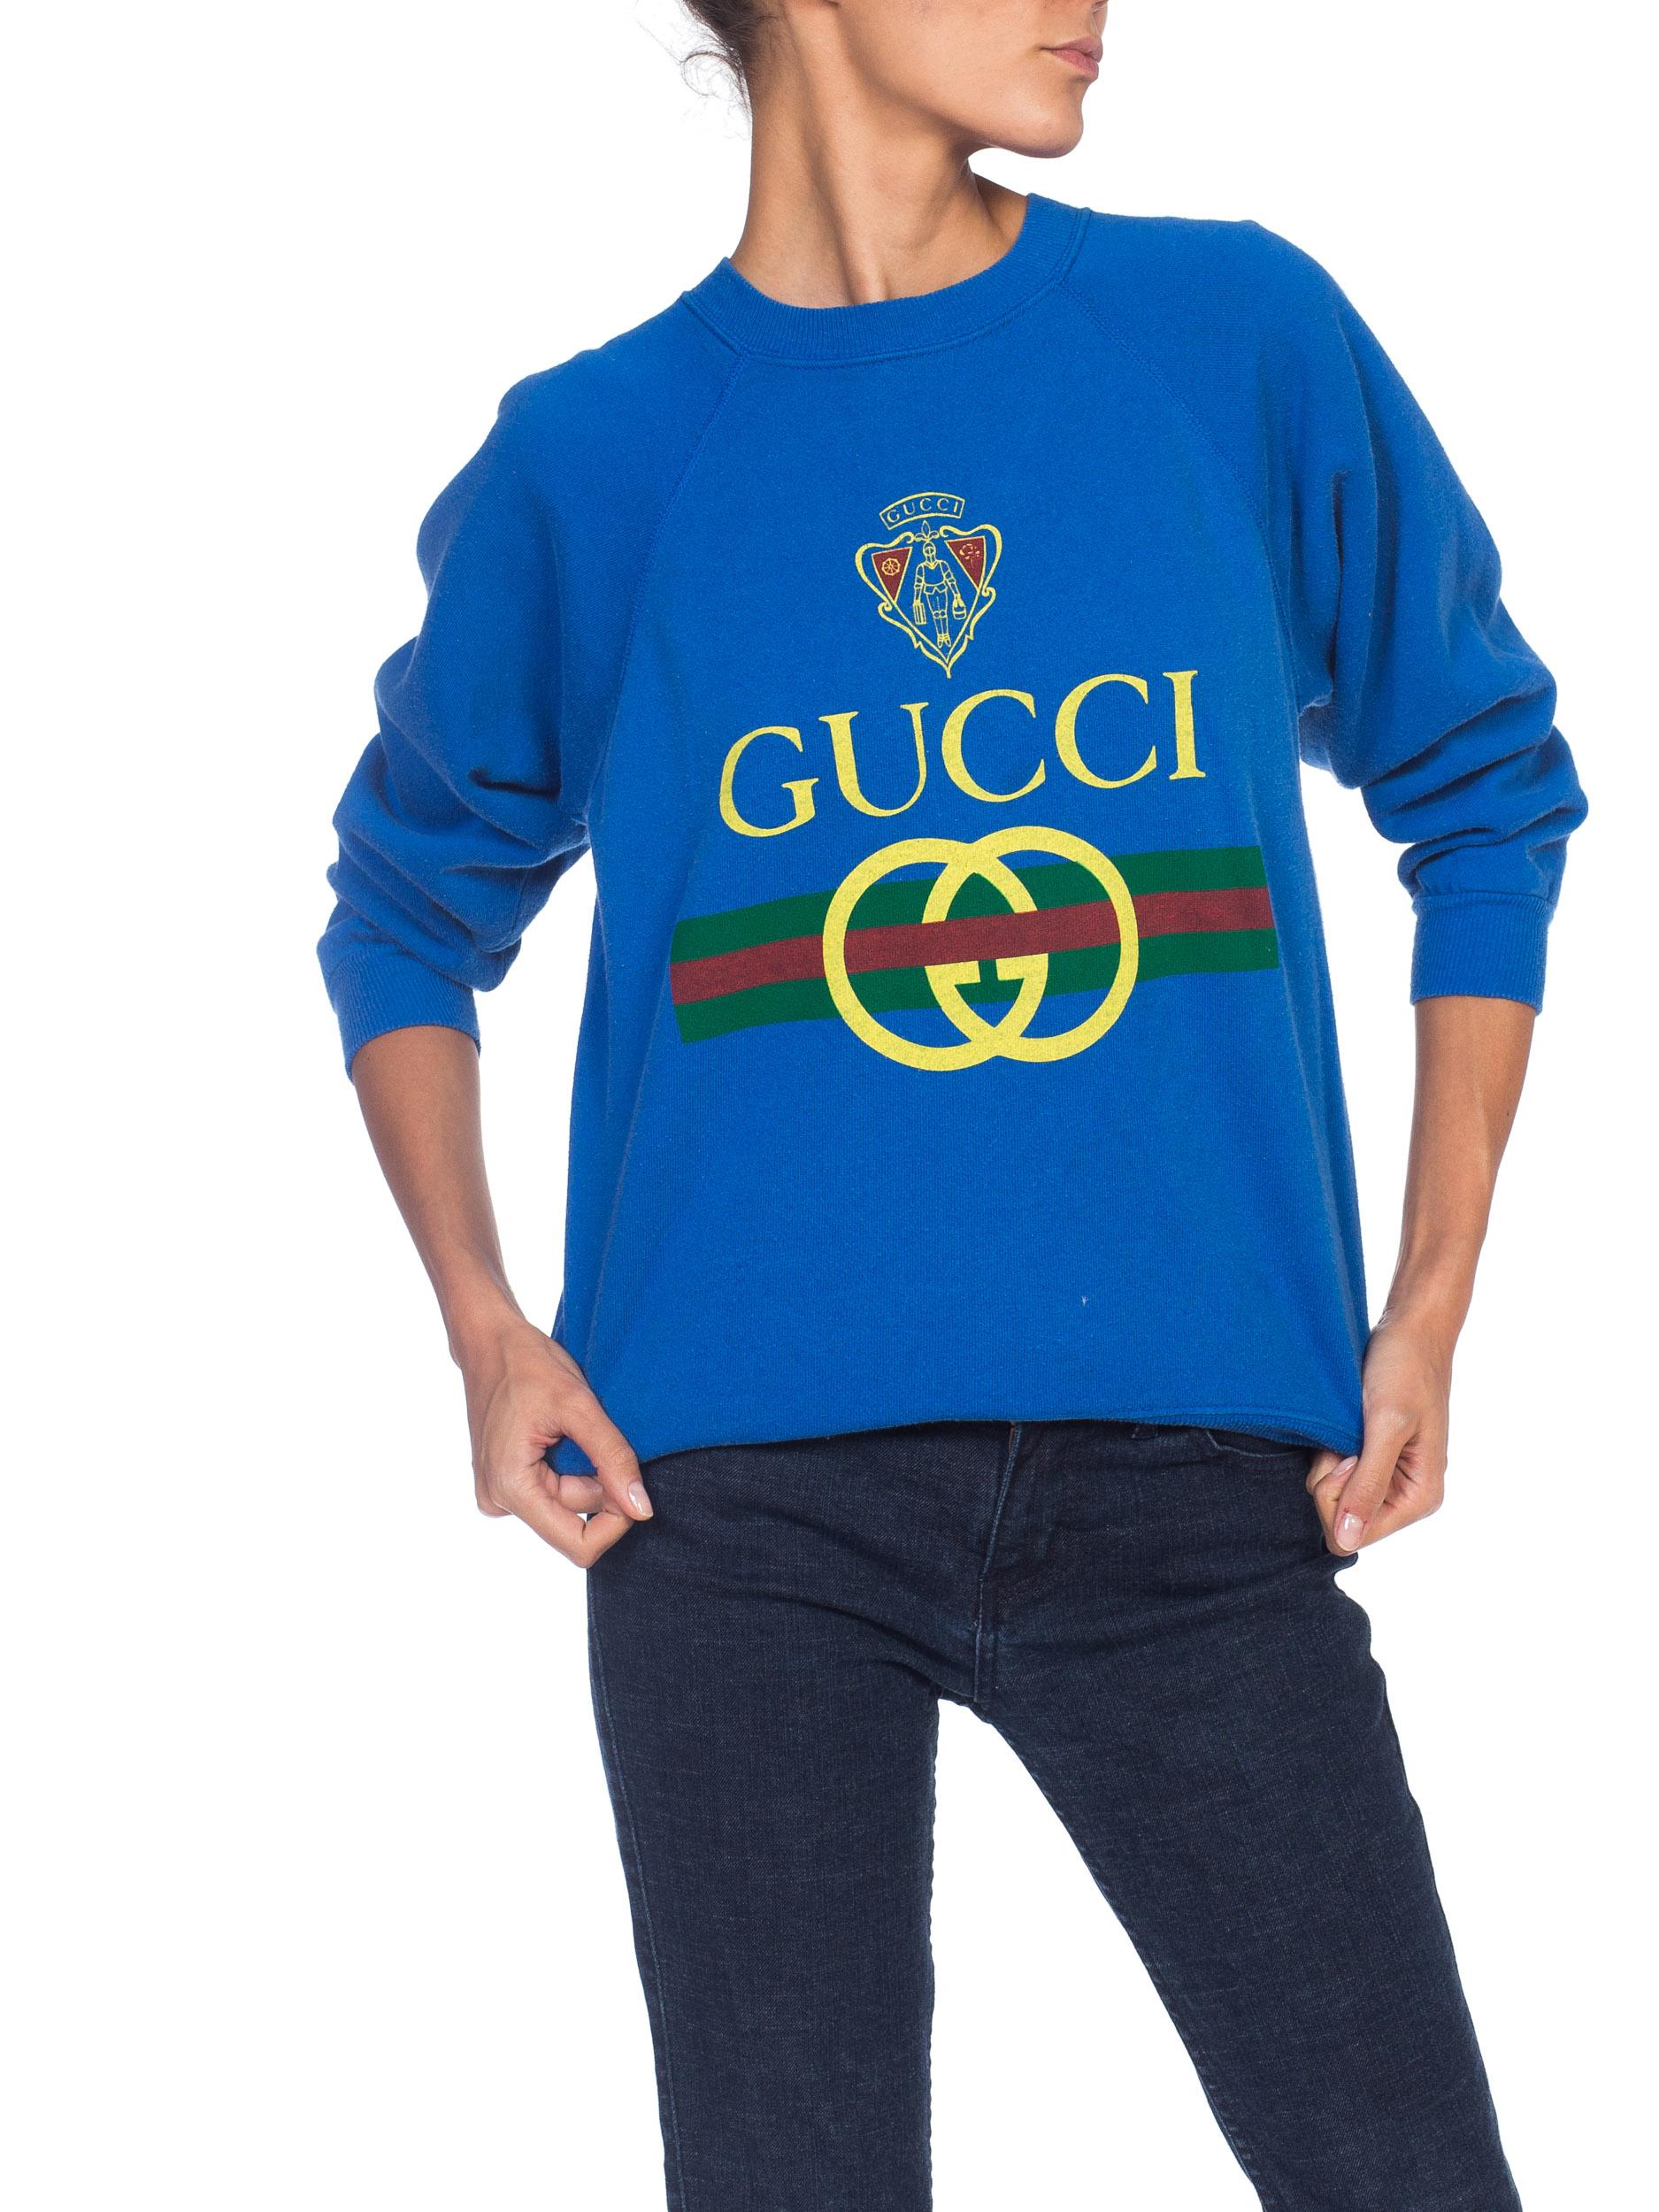 Women's or Men's 1980s Blue Bootleg Gucci Sweatshirt